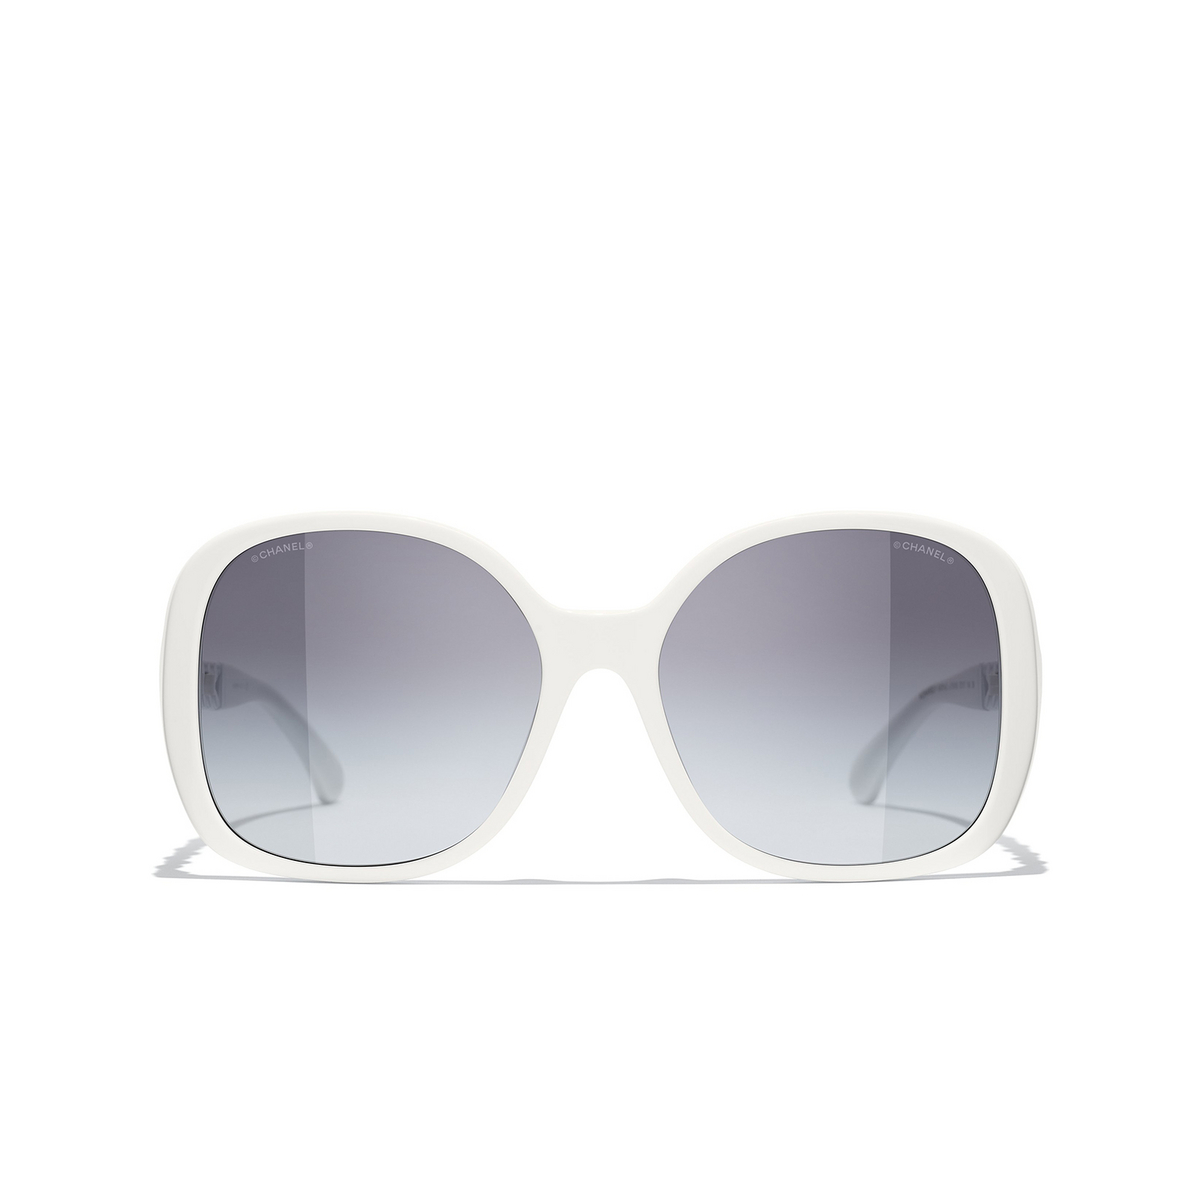 CHANEL square Sunglasses C716S6 White - front view